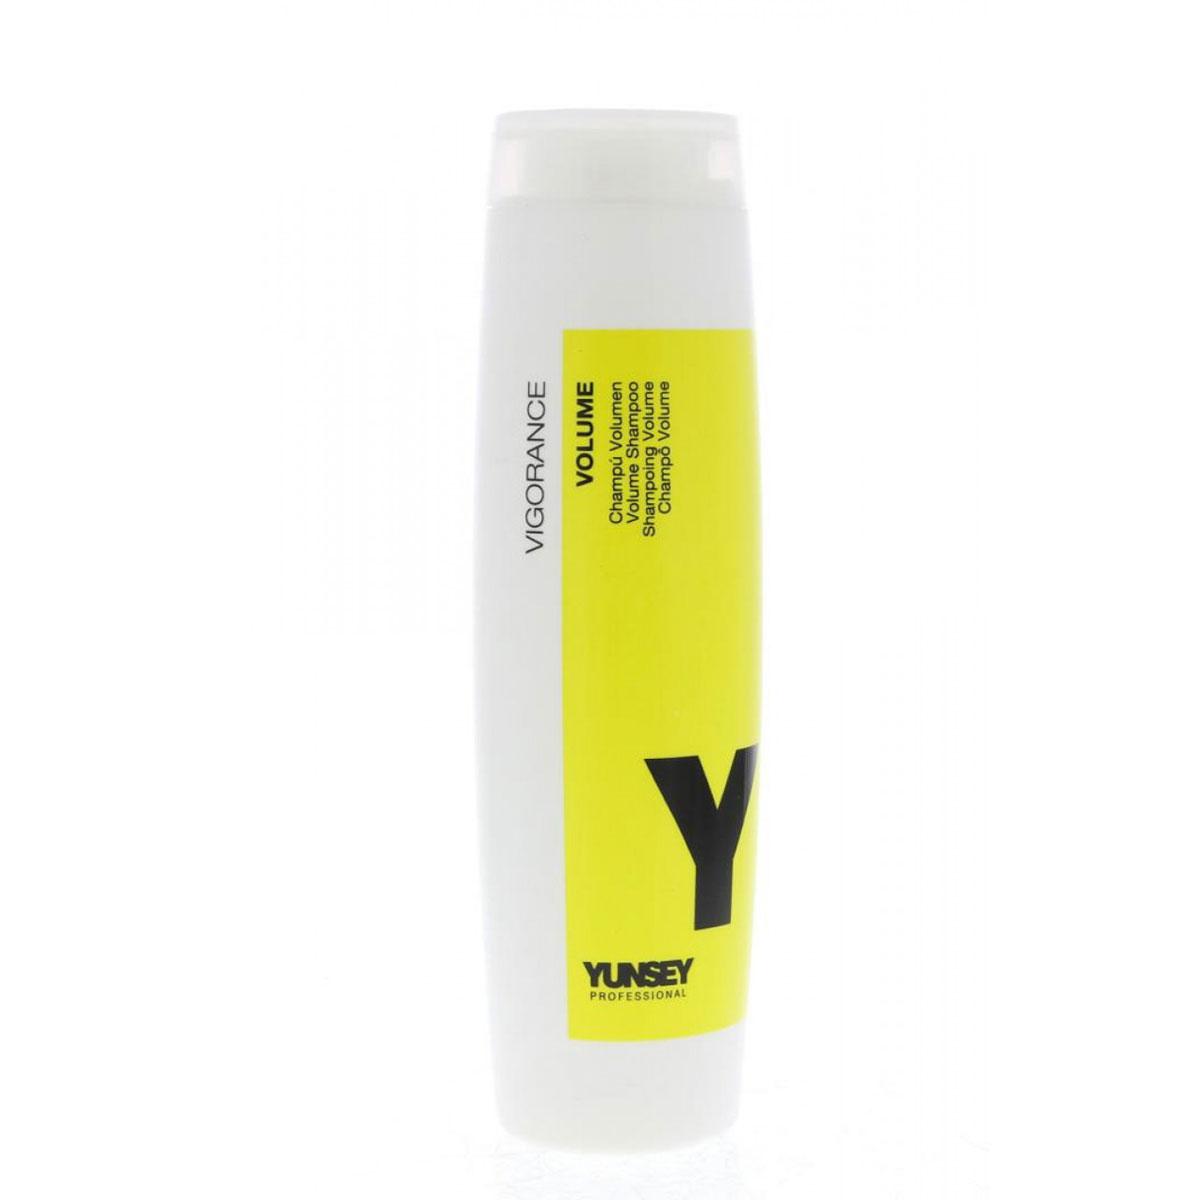 شامپو حجم دهنده و پروتئینه - Yunsey Vigorance Volume Shampoo